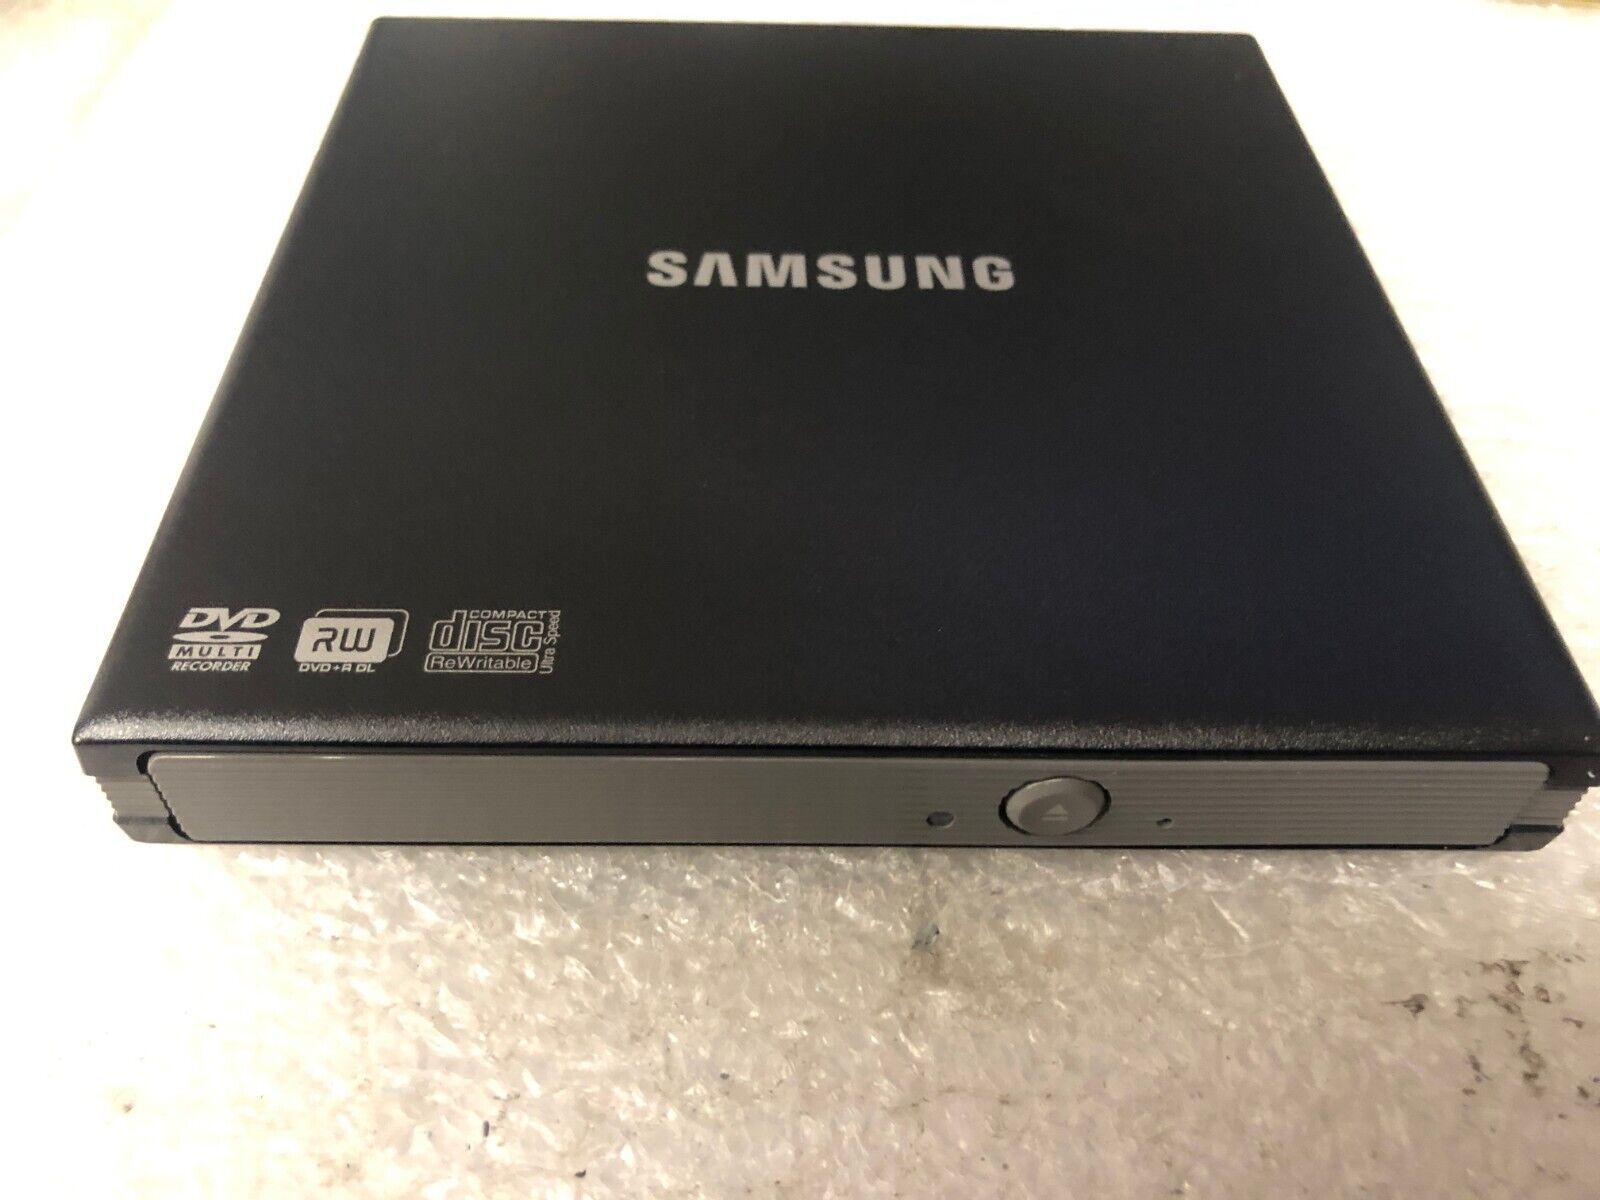 Samsung SE-208DB/TSBS SE-208 Slim Portable USB External DVD Writer